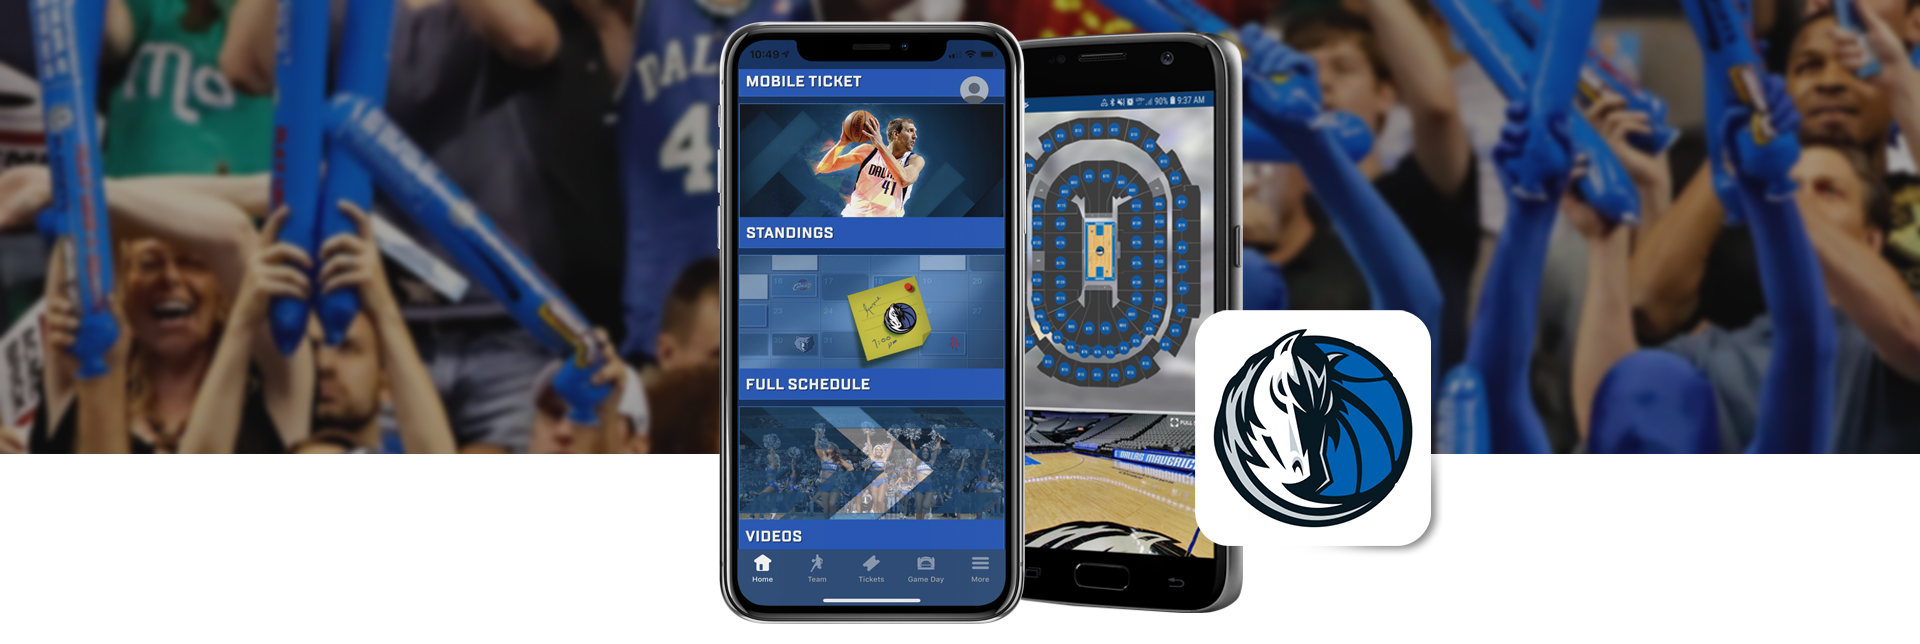 Mavs Mobile App - The Official Home of the Dallas Mavericks